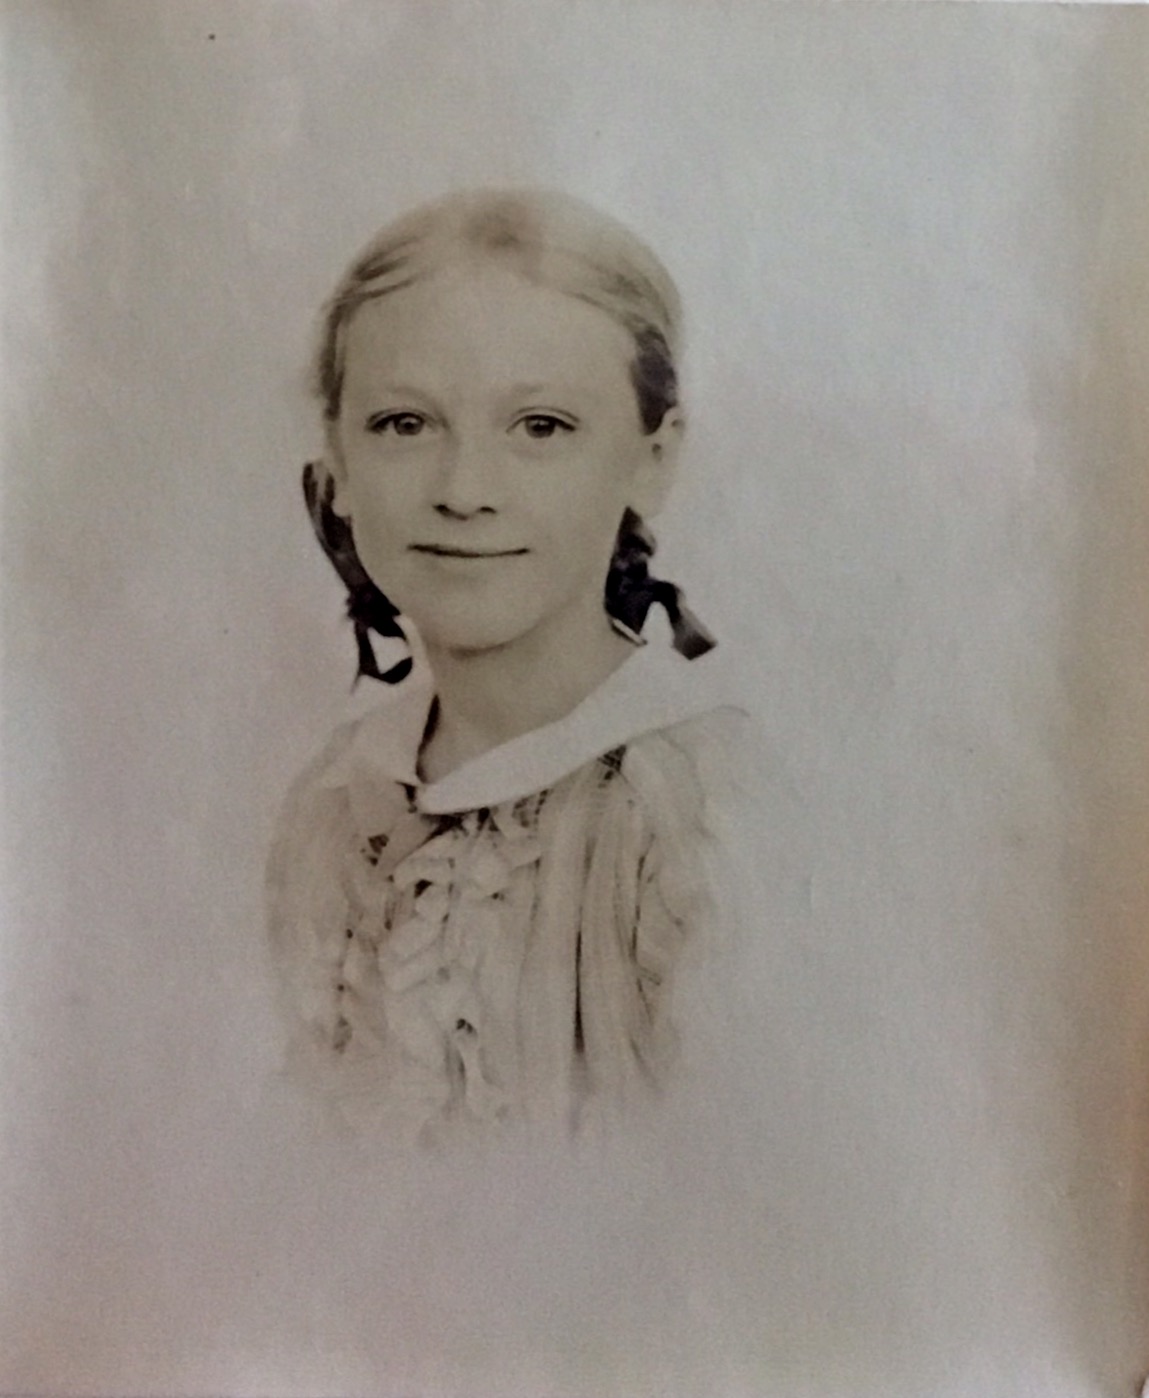 4th grade school picture, 1935-36 school year